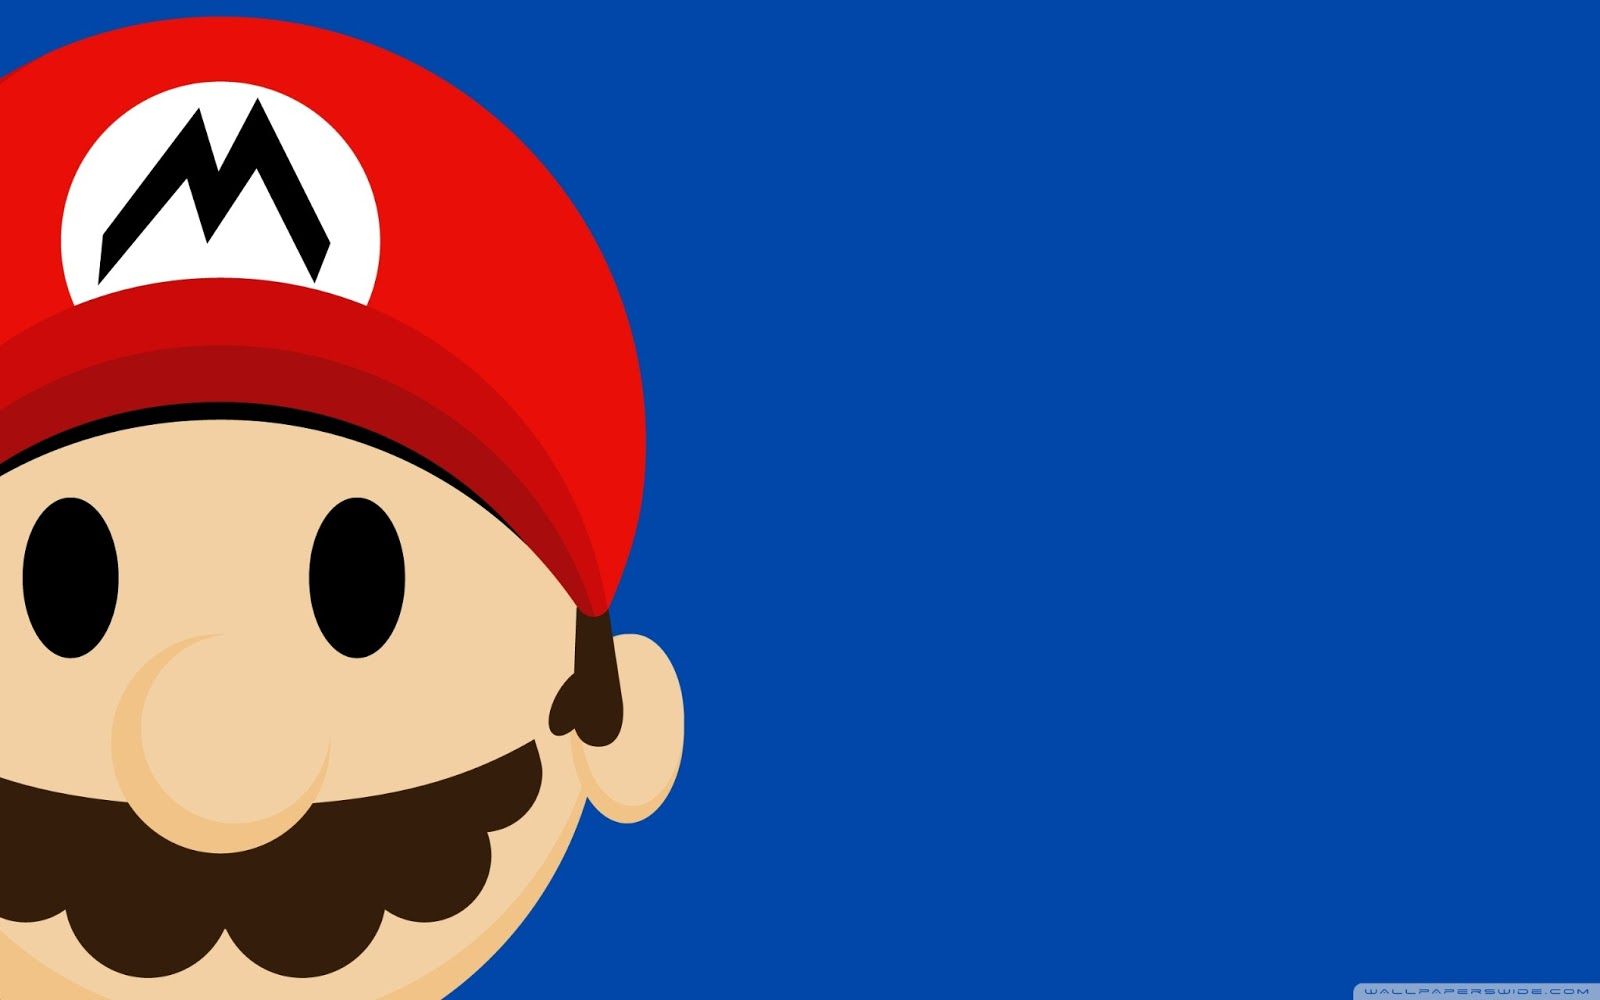 Mario Background for Desktop. Mario Wallpaper, Mario iPhone Wallpaper and Funny Mario Wallpaper